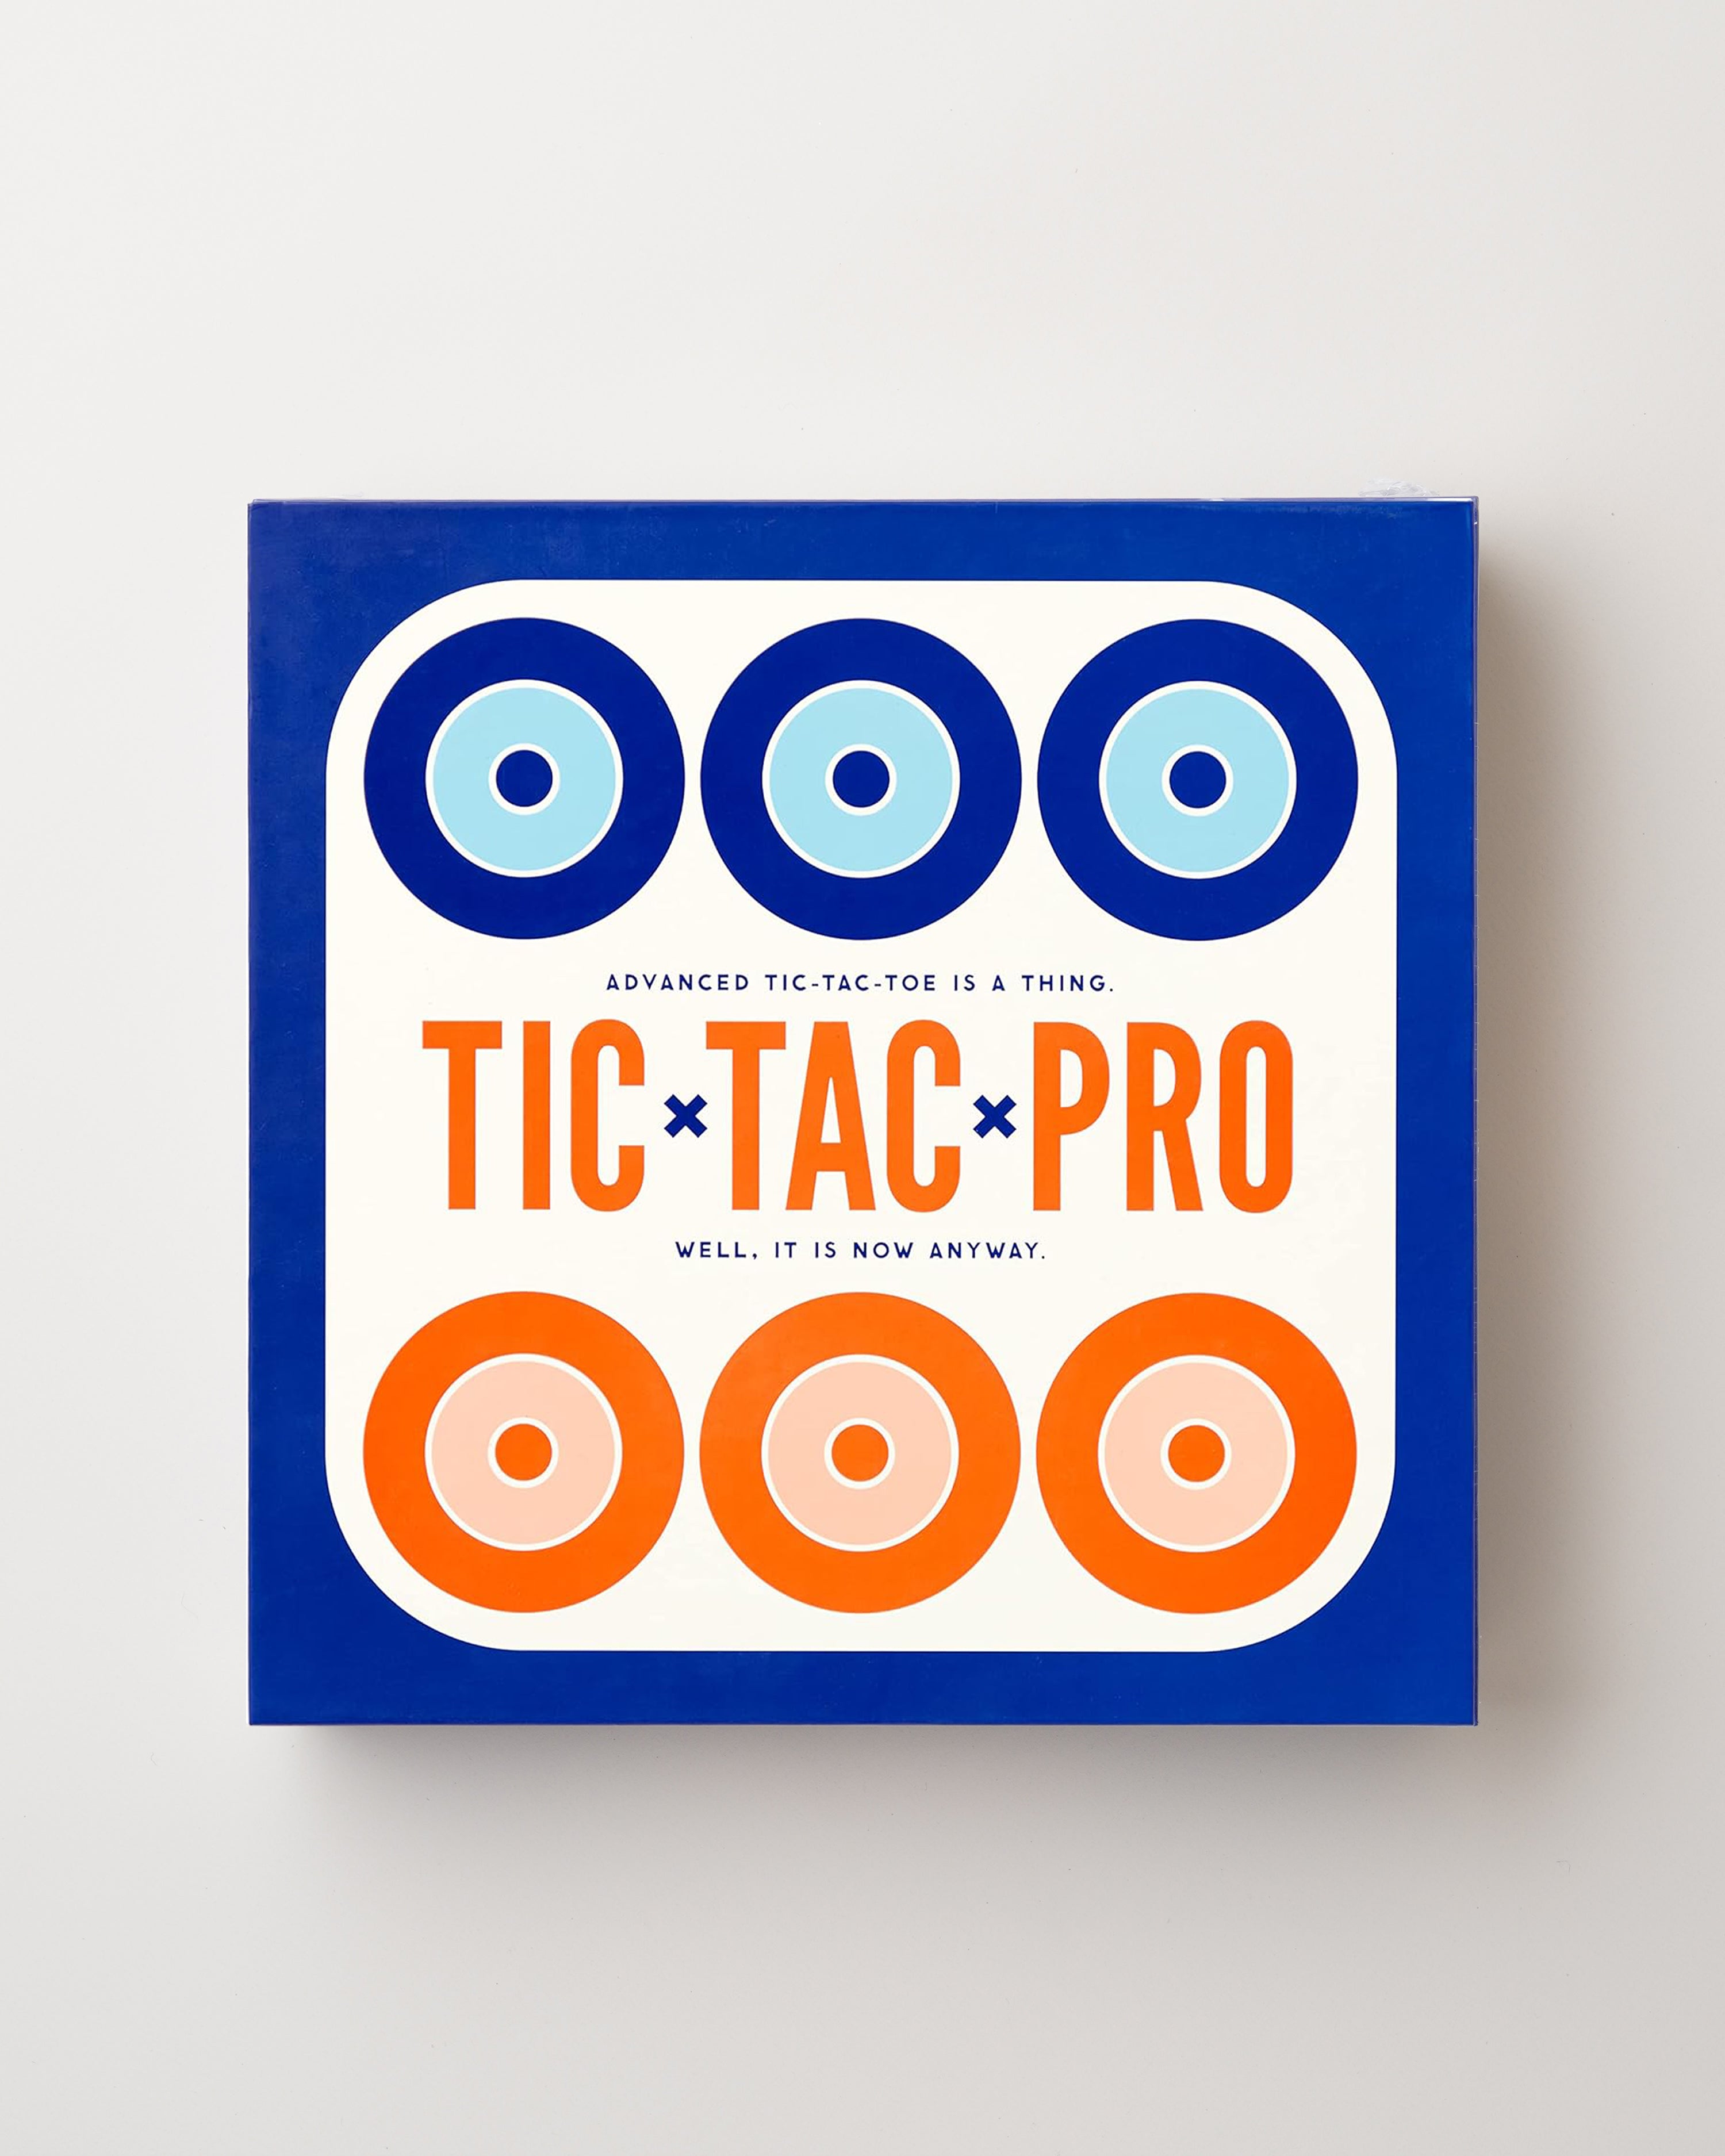 Tic Tac Pro Game Set